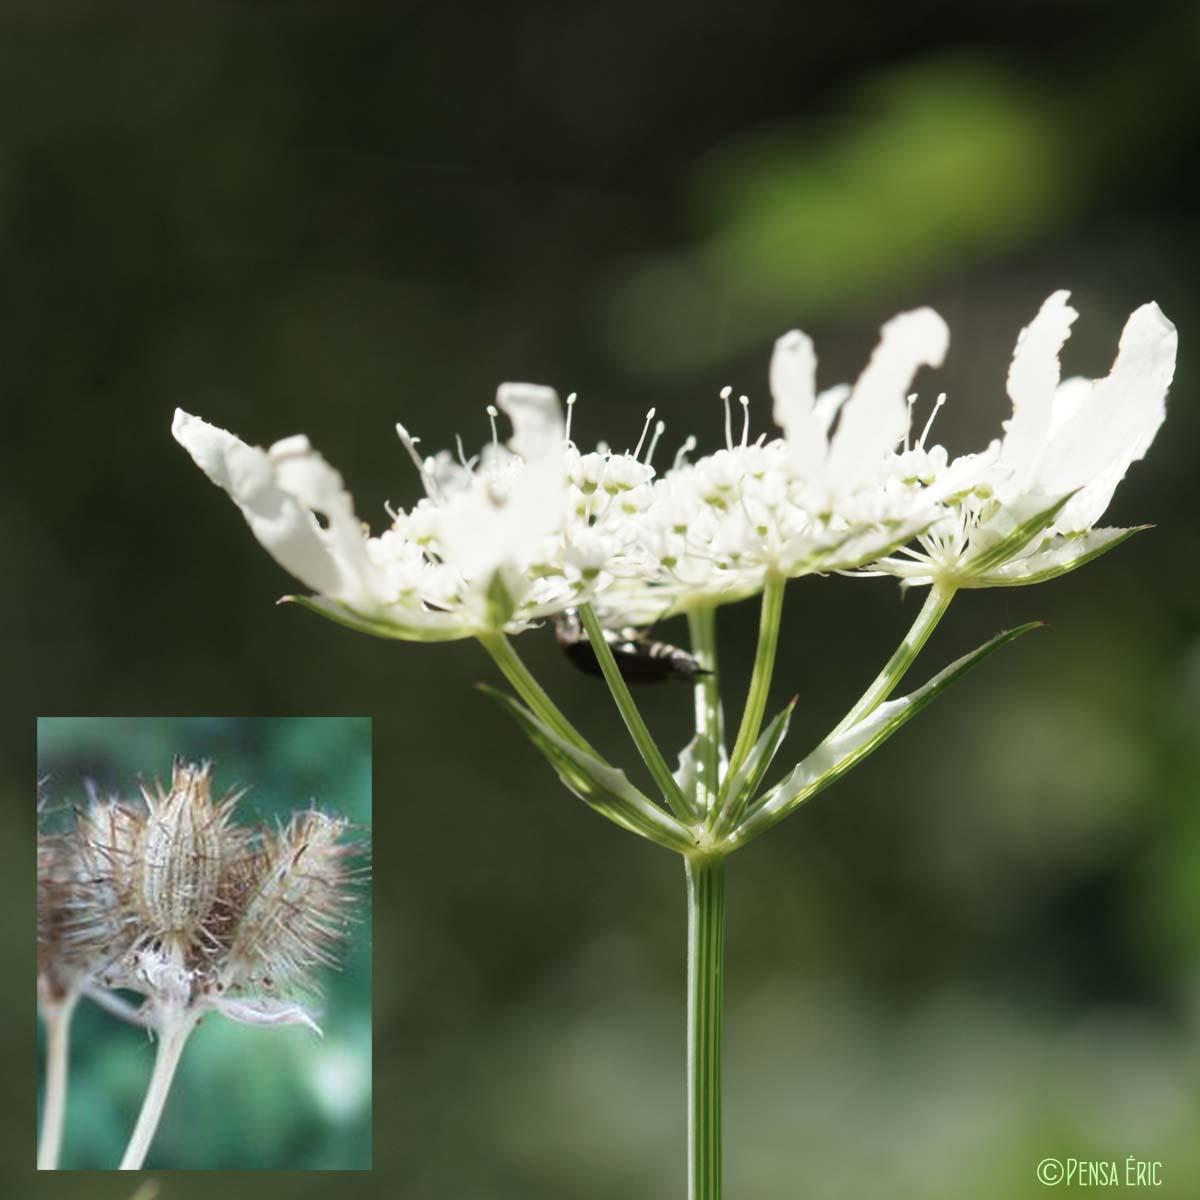 Caucalis à grandes fleurs - Orlaya grandiflora